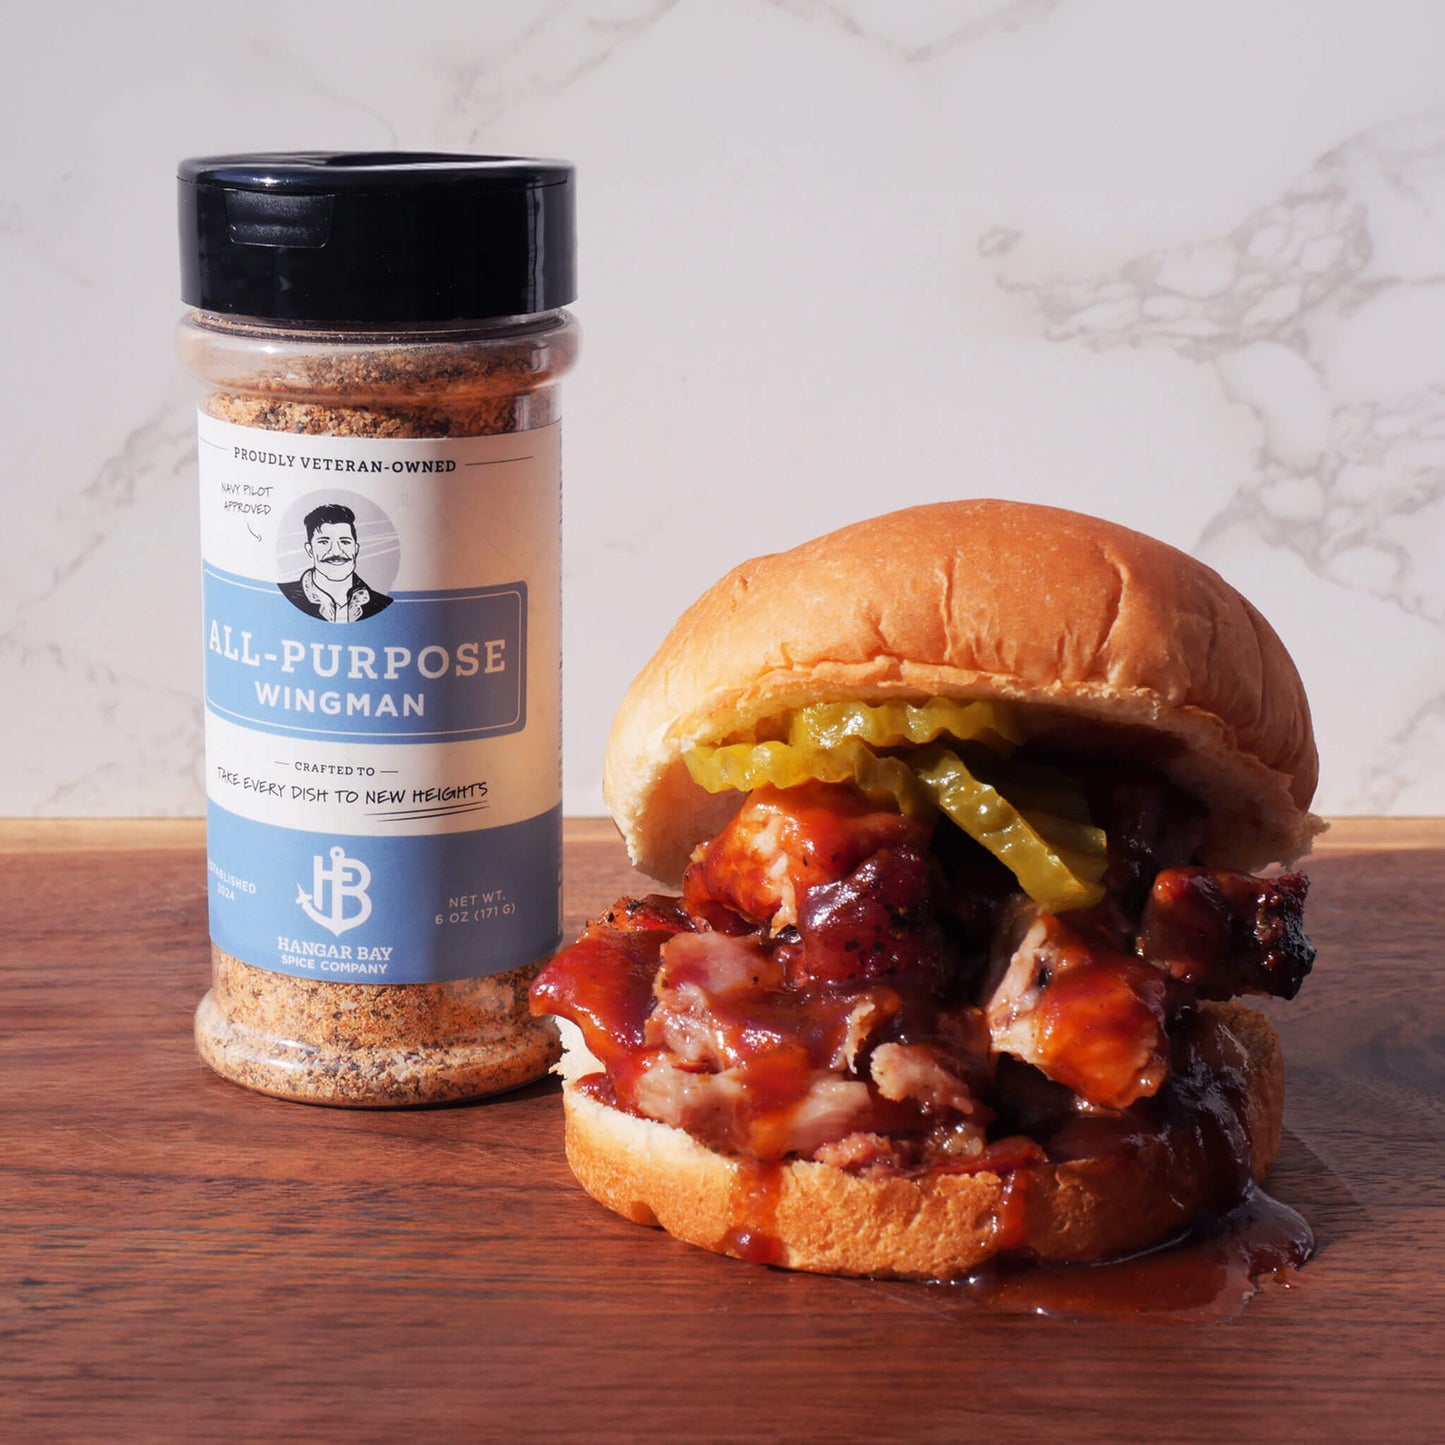 Wingman All-Purpose Seasoning with brisket sandwich on hamburger bun with sauce and pickles